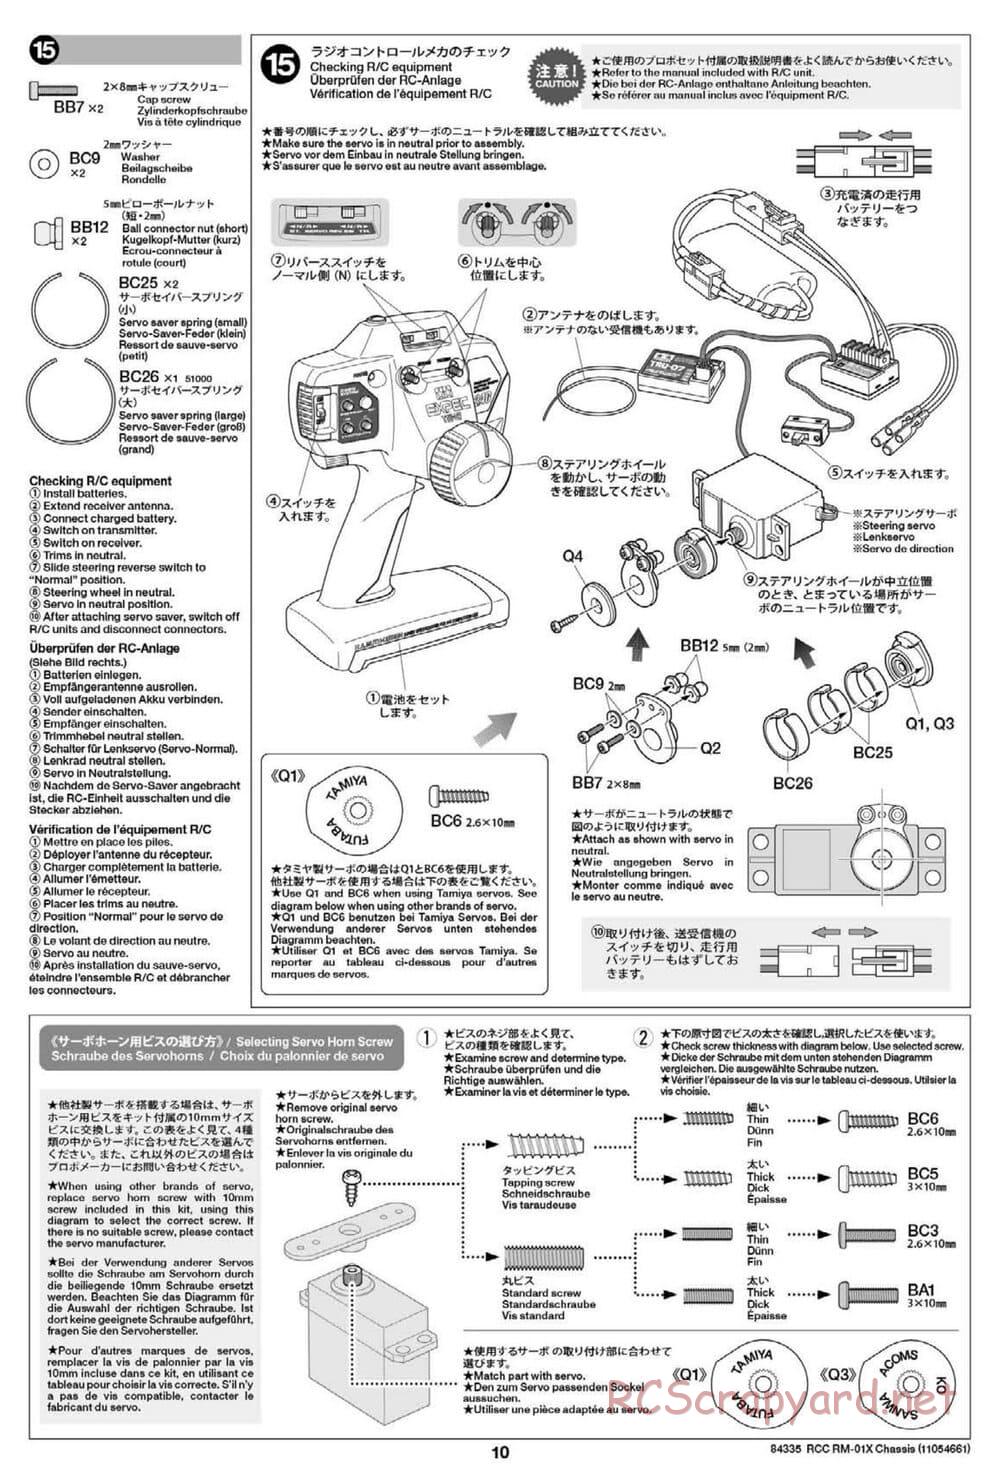 Tamiya - RM-01X Chassis - Manual - Page 10